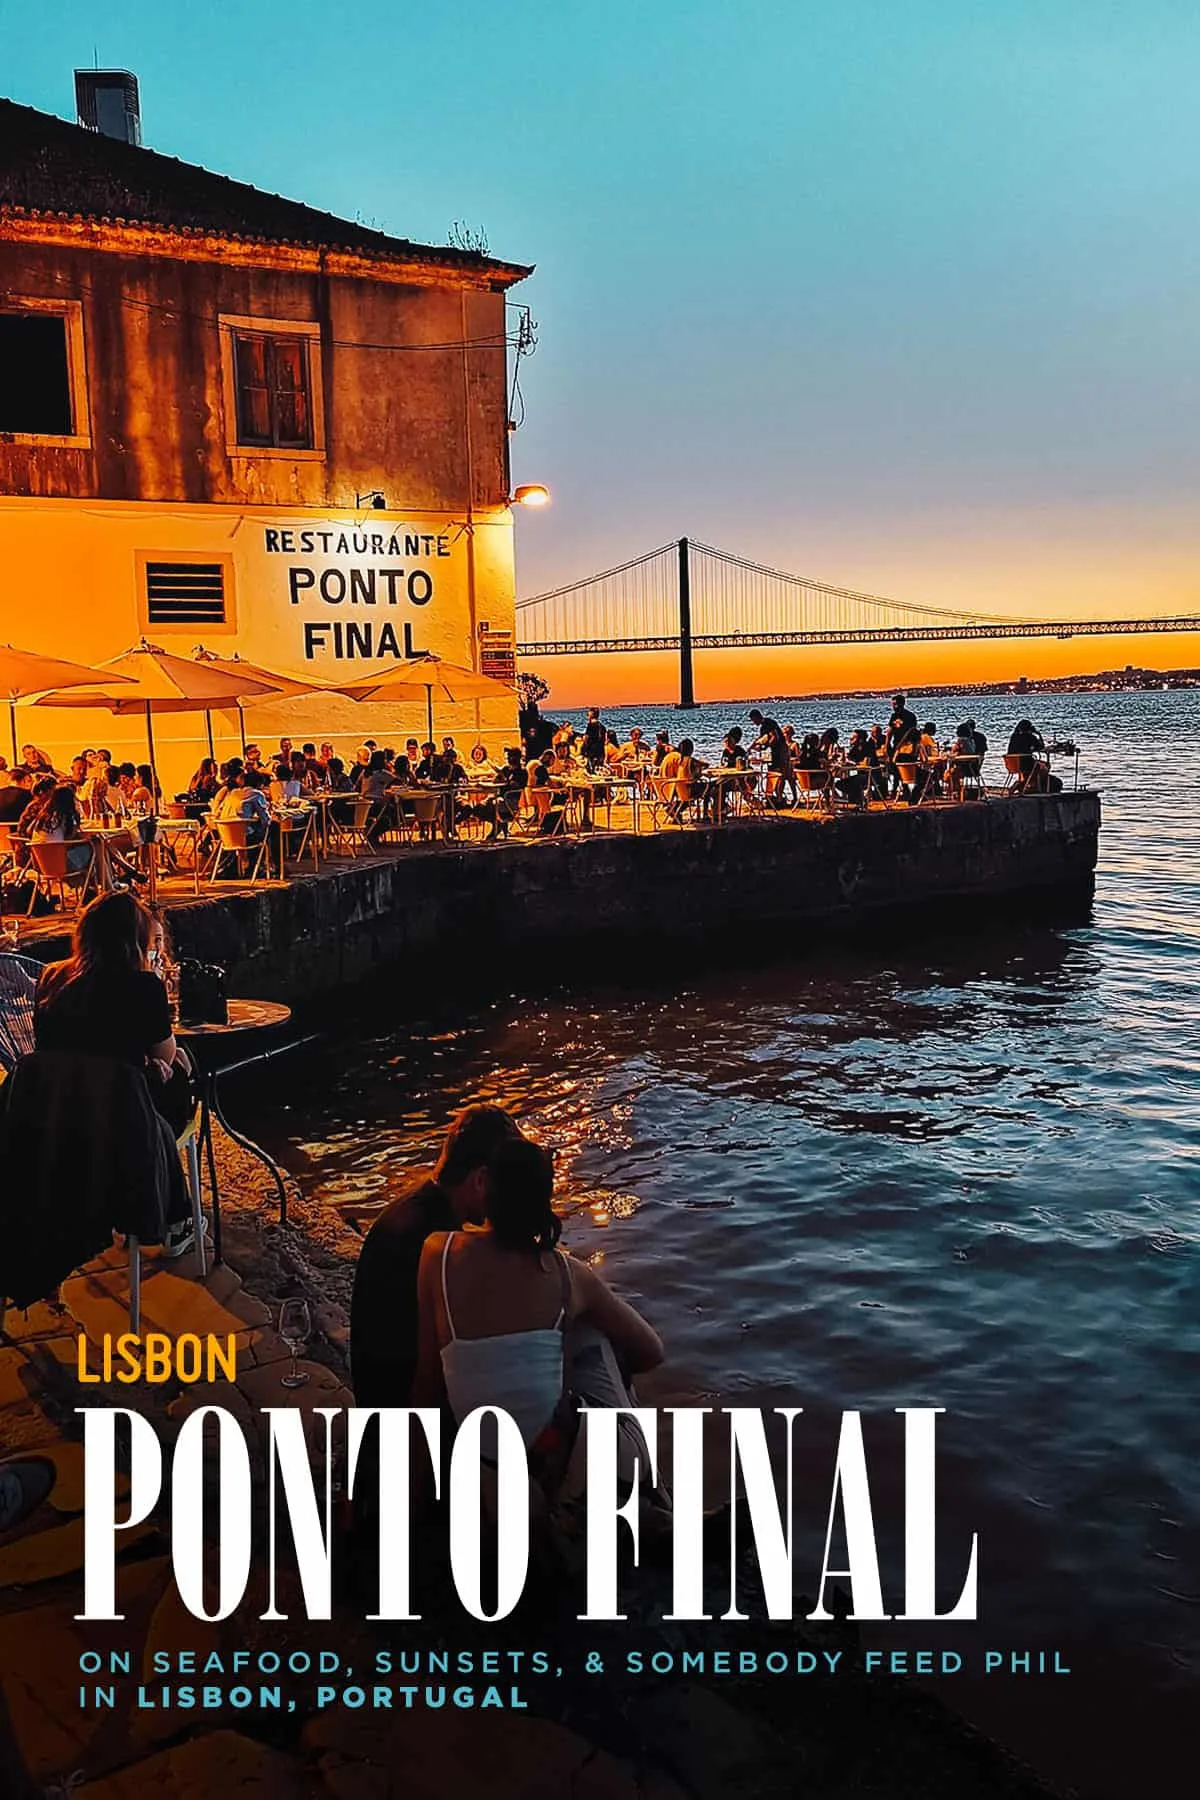 Ponto Final restaurant in Lisbon, Portugal